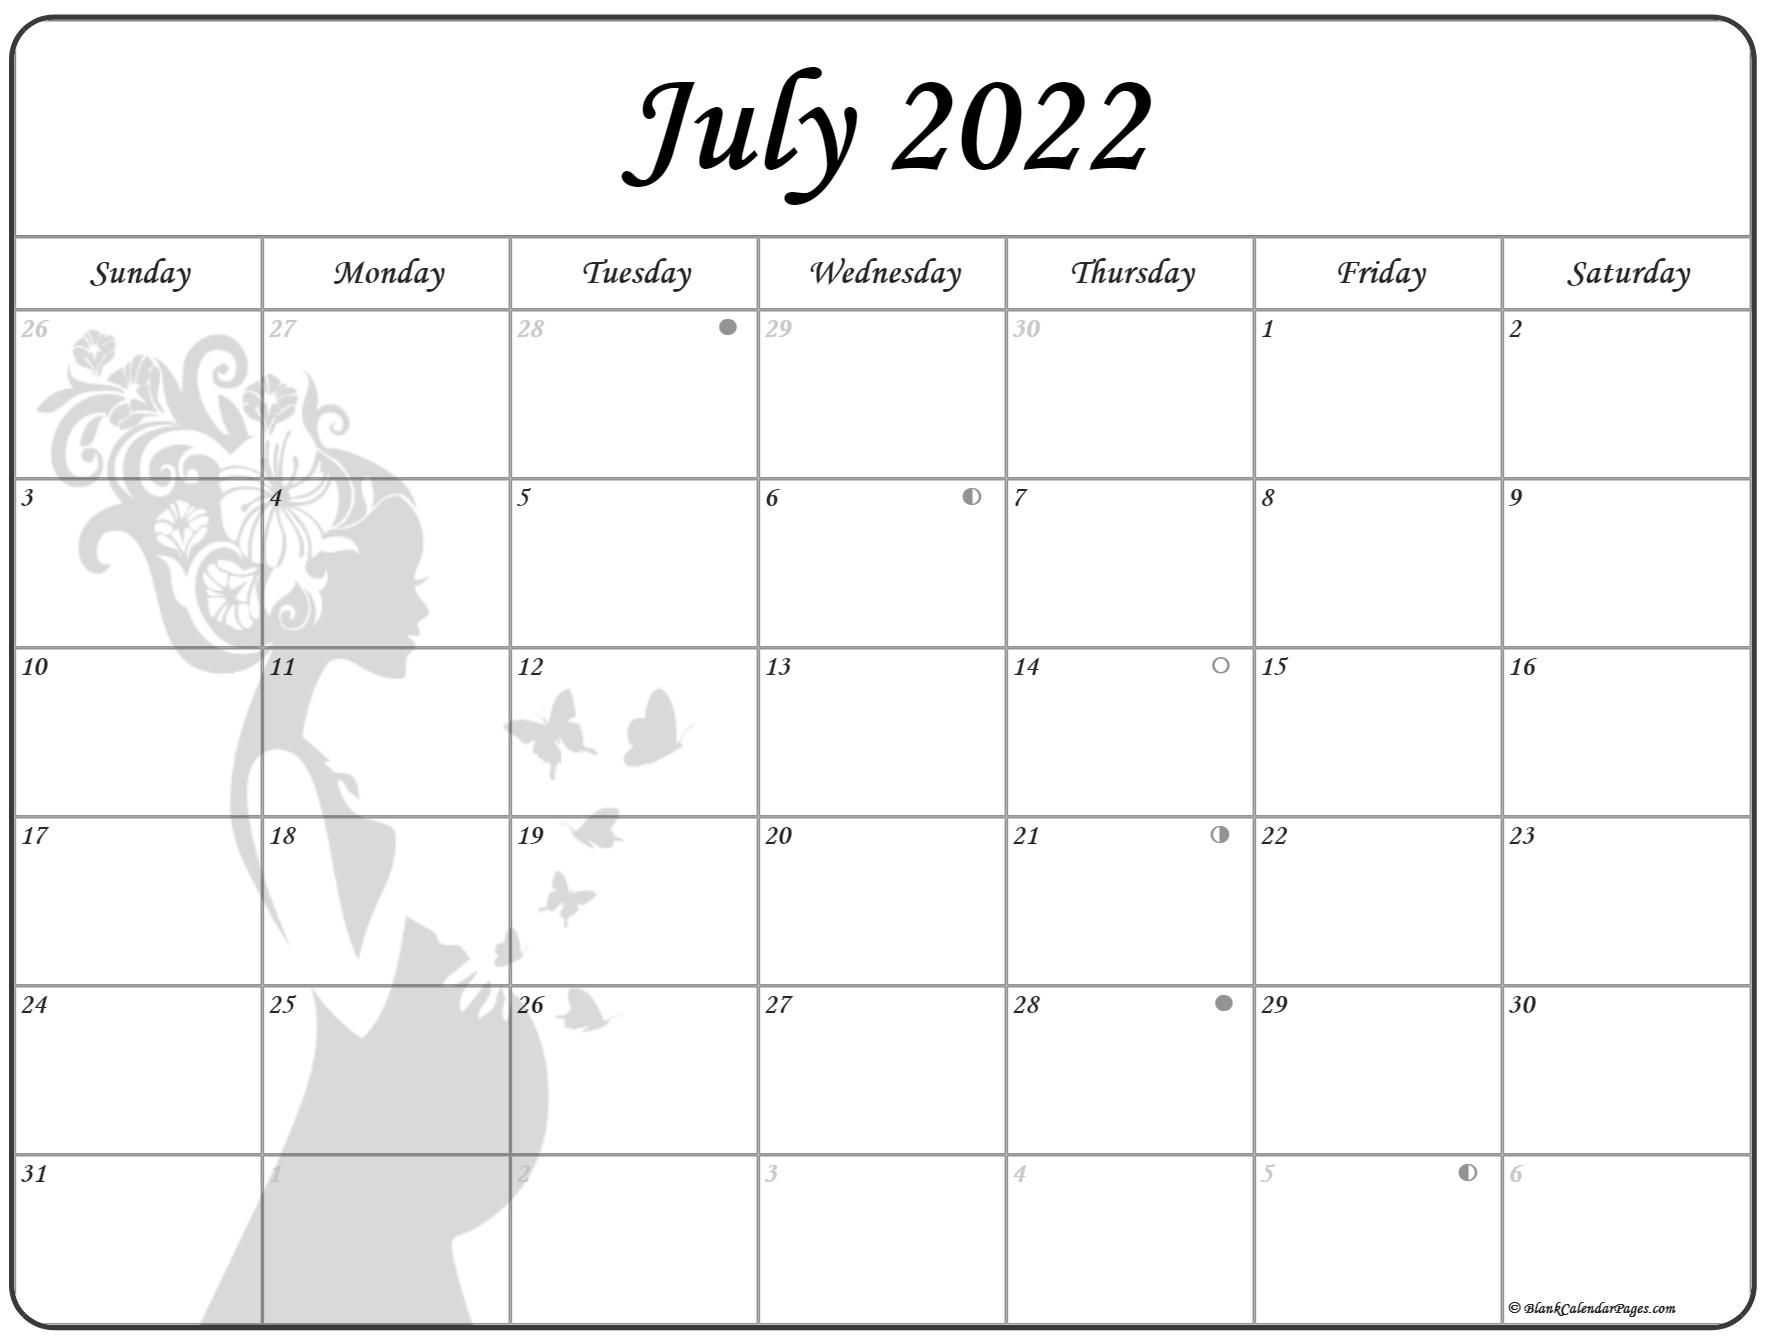 July 2022 Pregnancy Calendar | Fertility Calendar